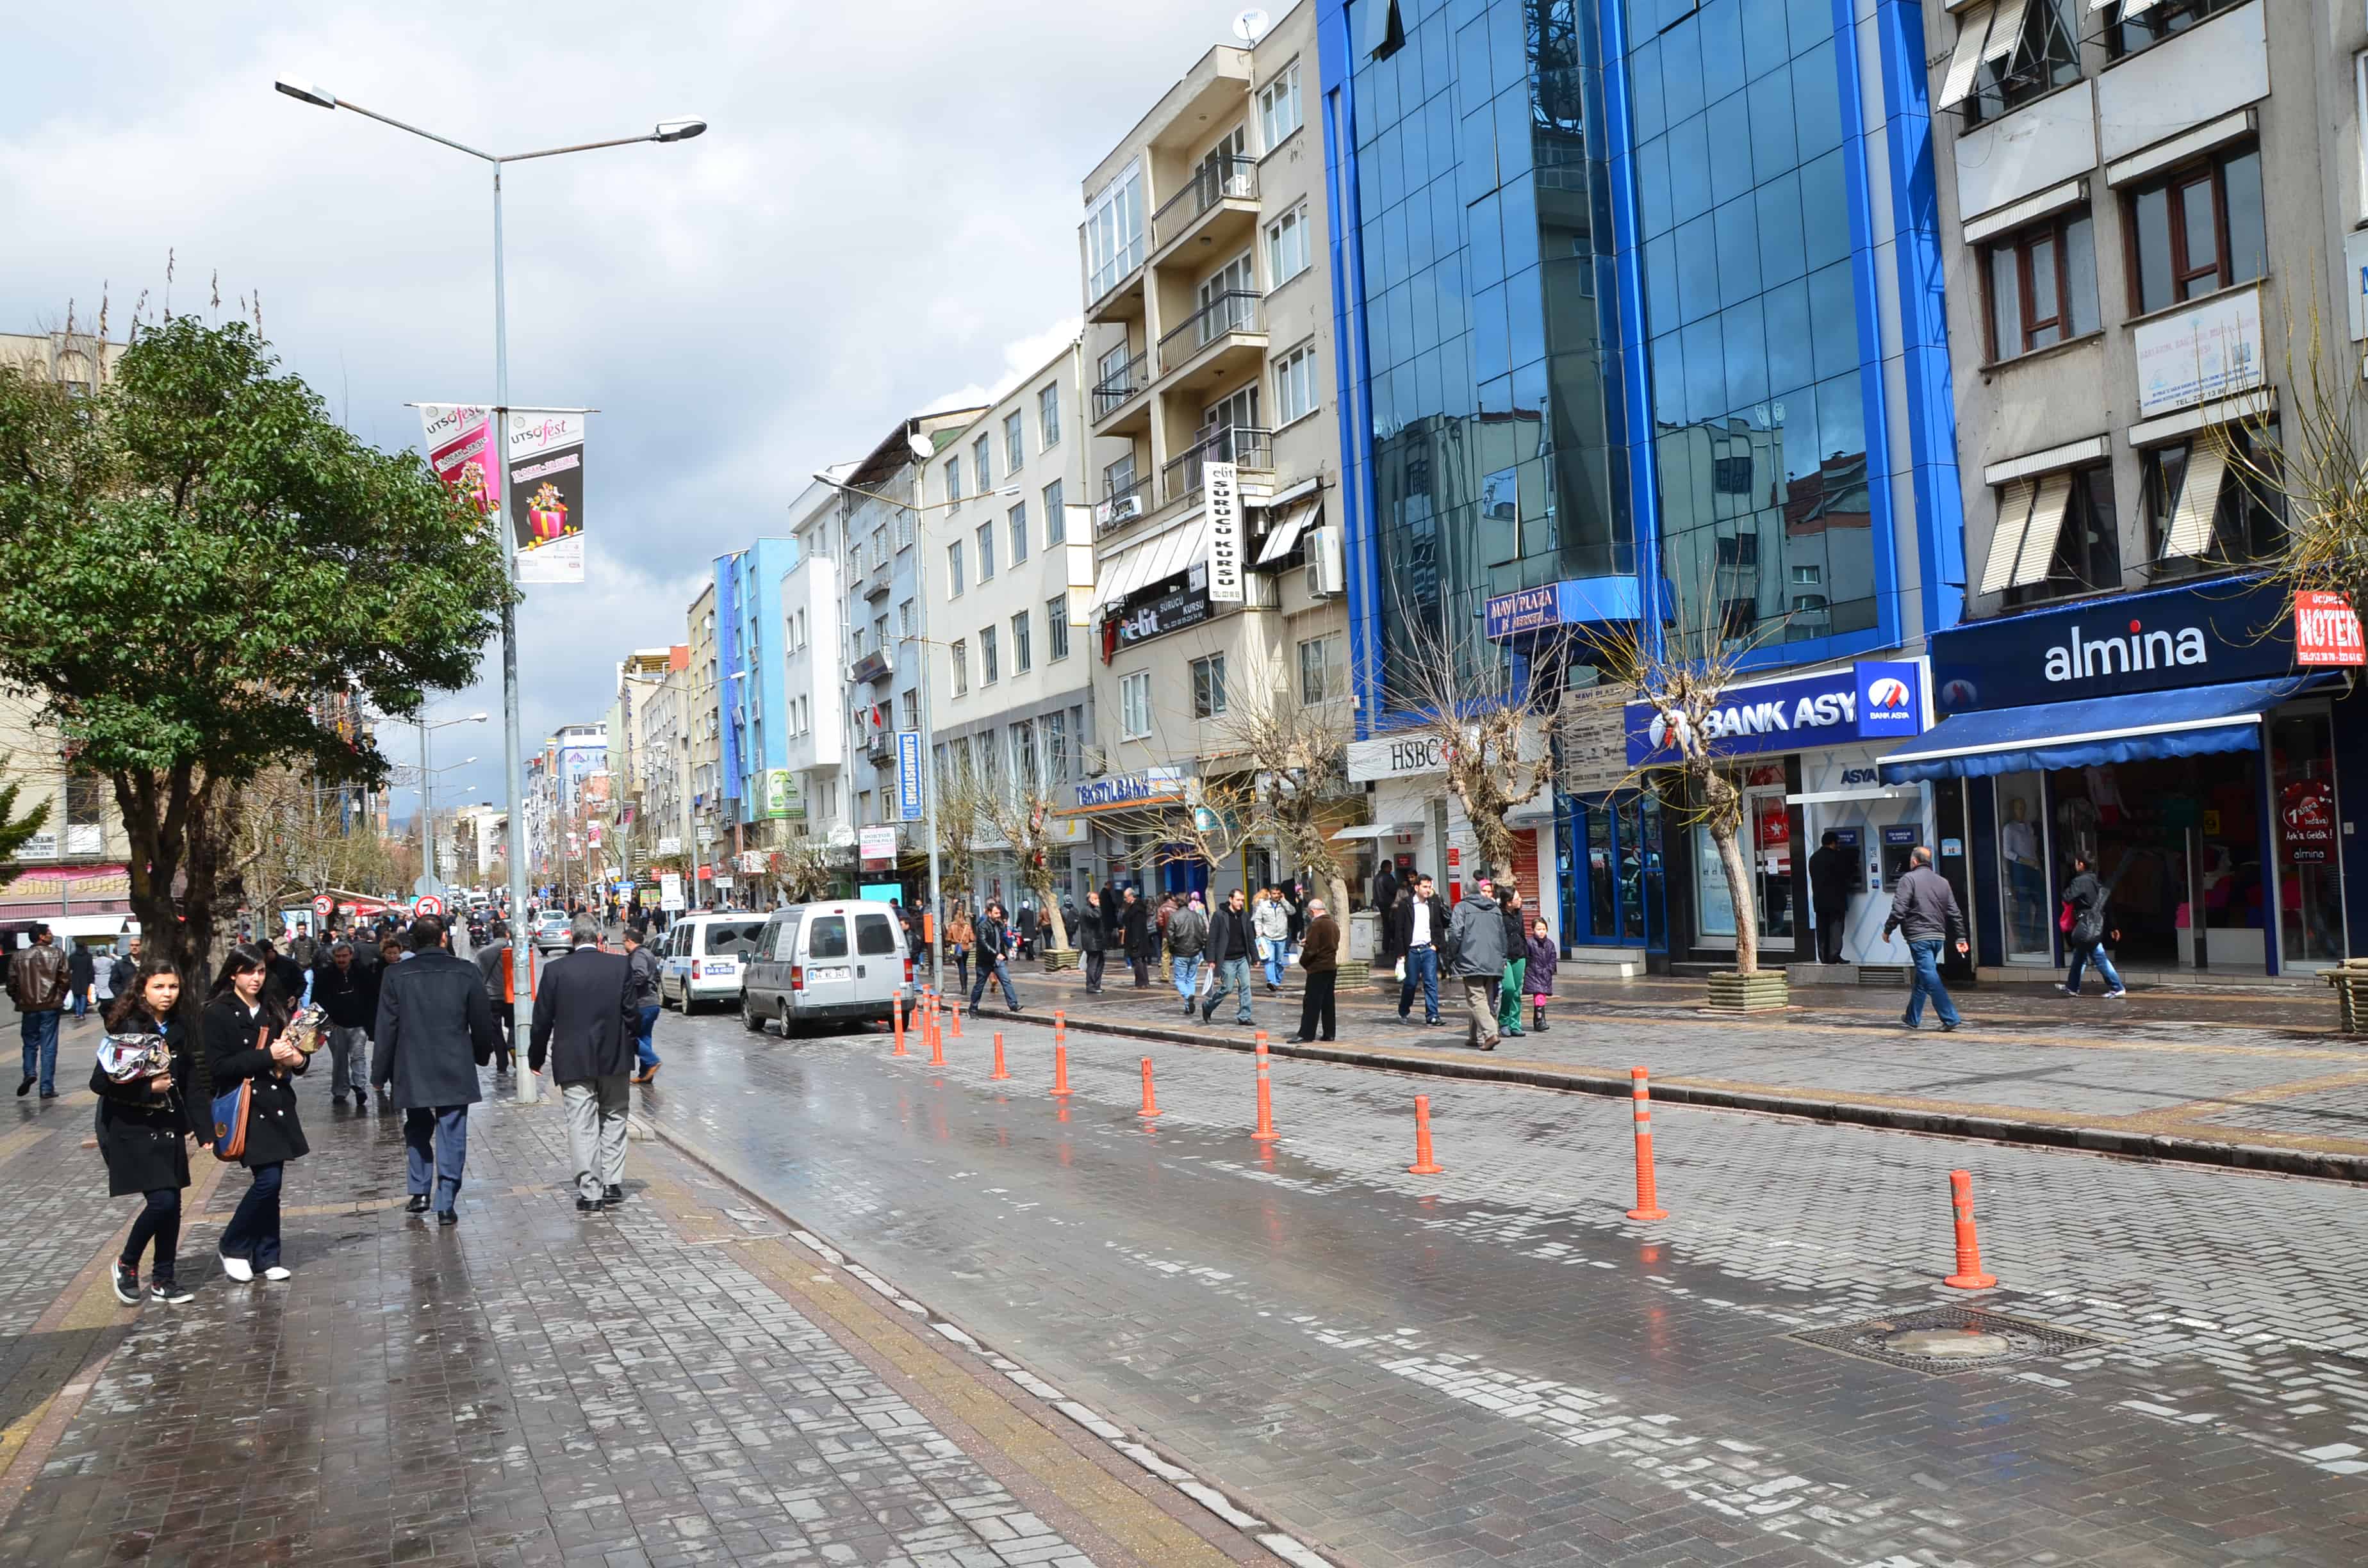 İsmet Pasha Street in Uşak, Turkey